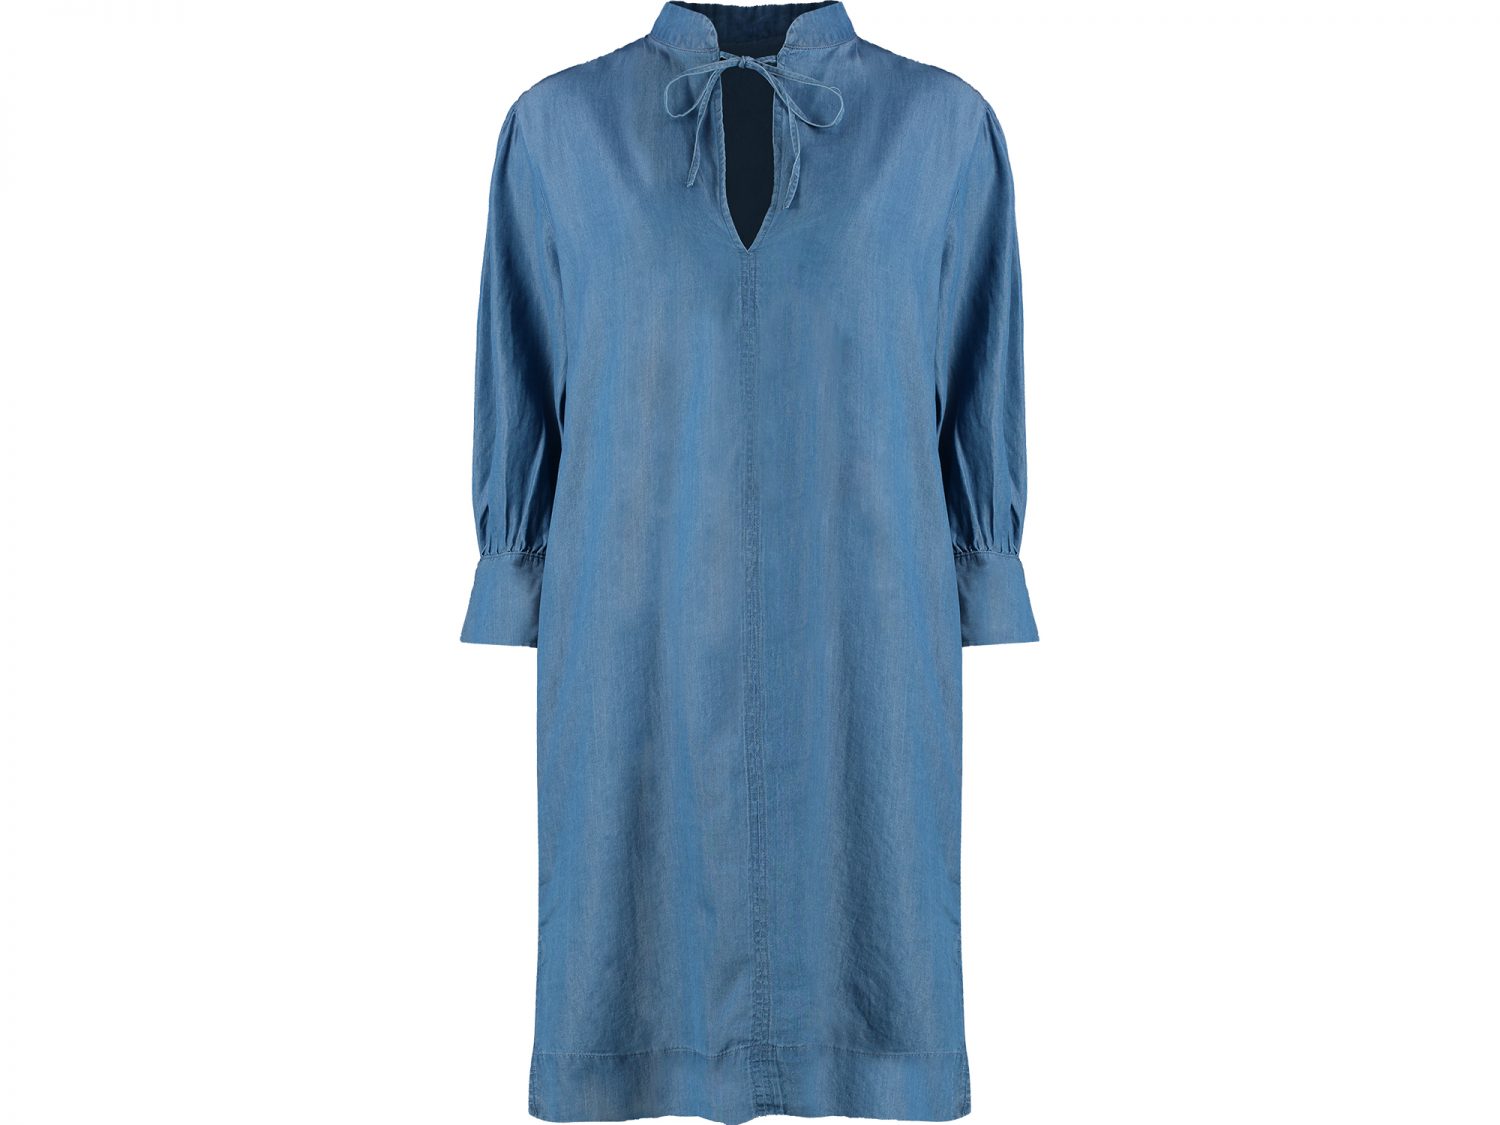 Blue Denim Dress Front 1